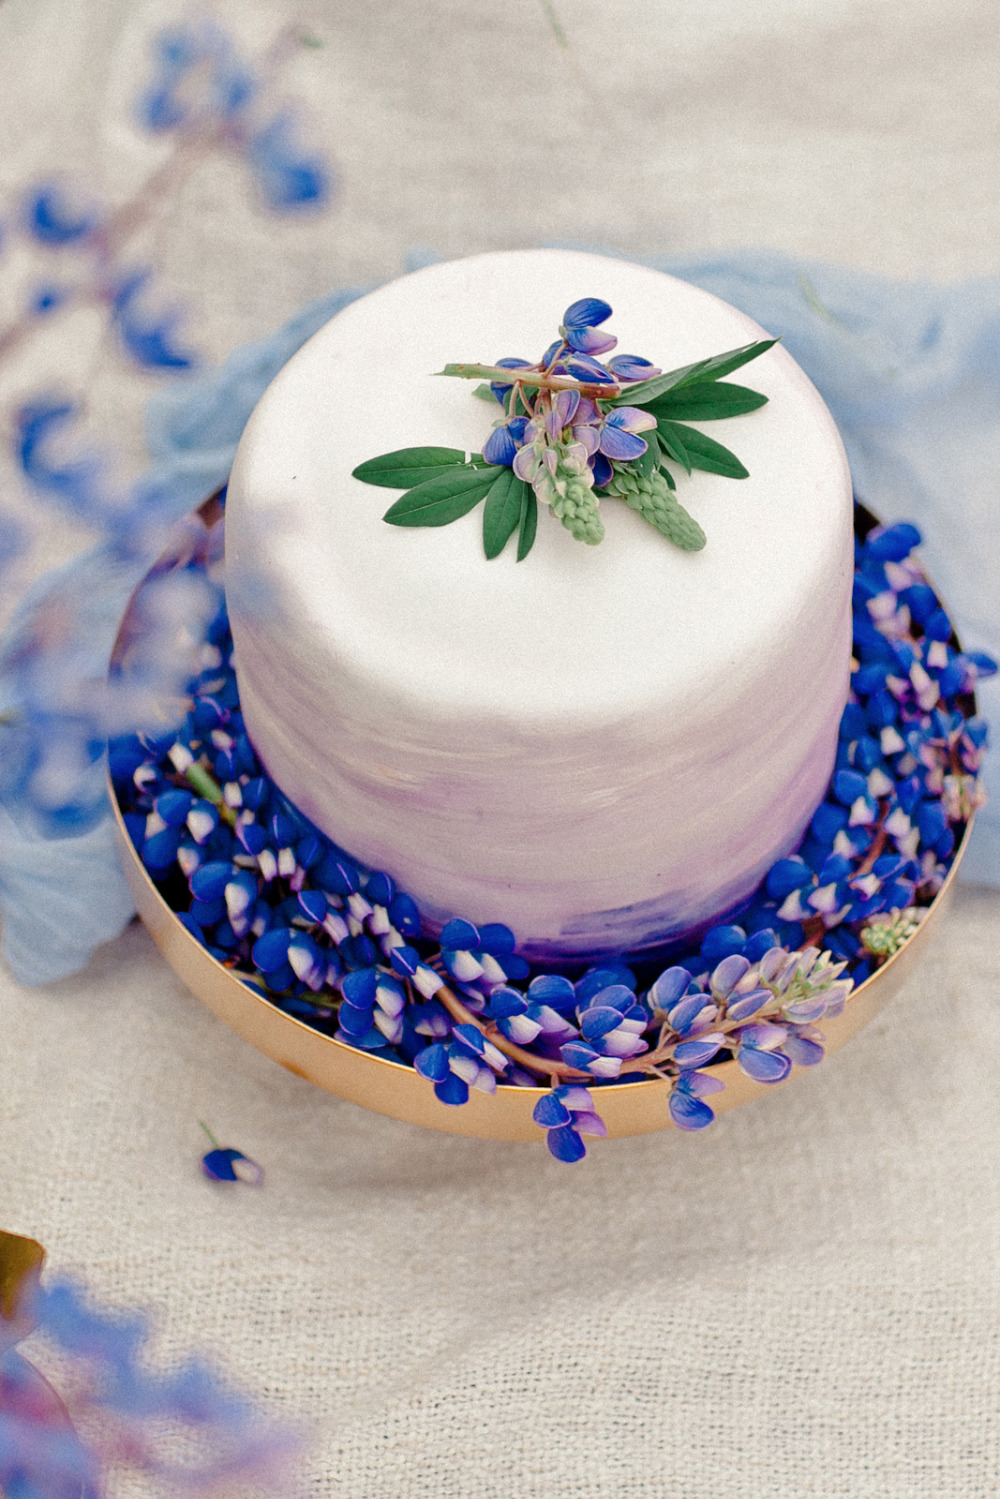 lupine wedding cake inspiration